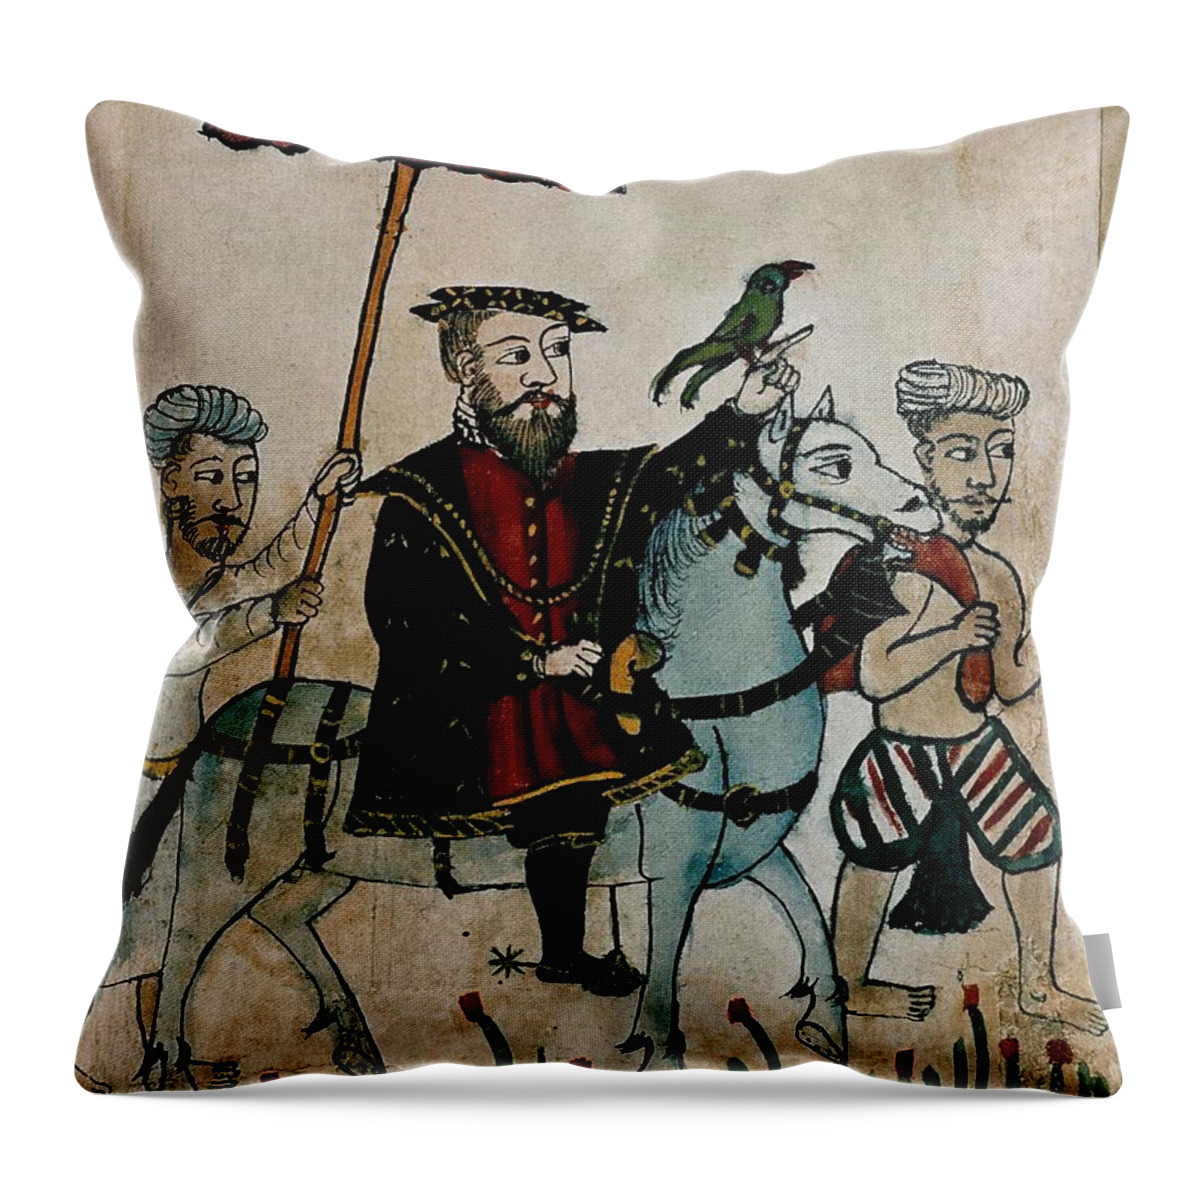 Vasco De Gama Throw Pillow featuring the drawing Vasco de Gama riding representing the Portuguese coming to India. Rome, Biblioteca Casanatense. by Album